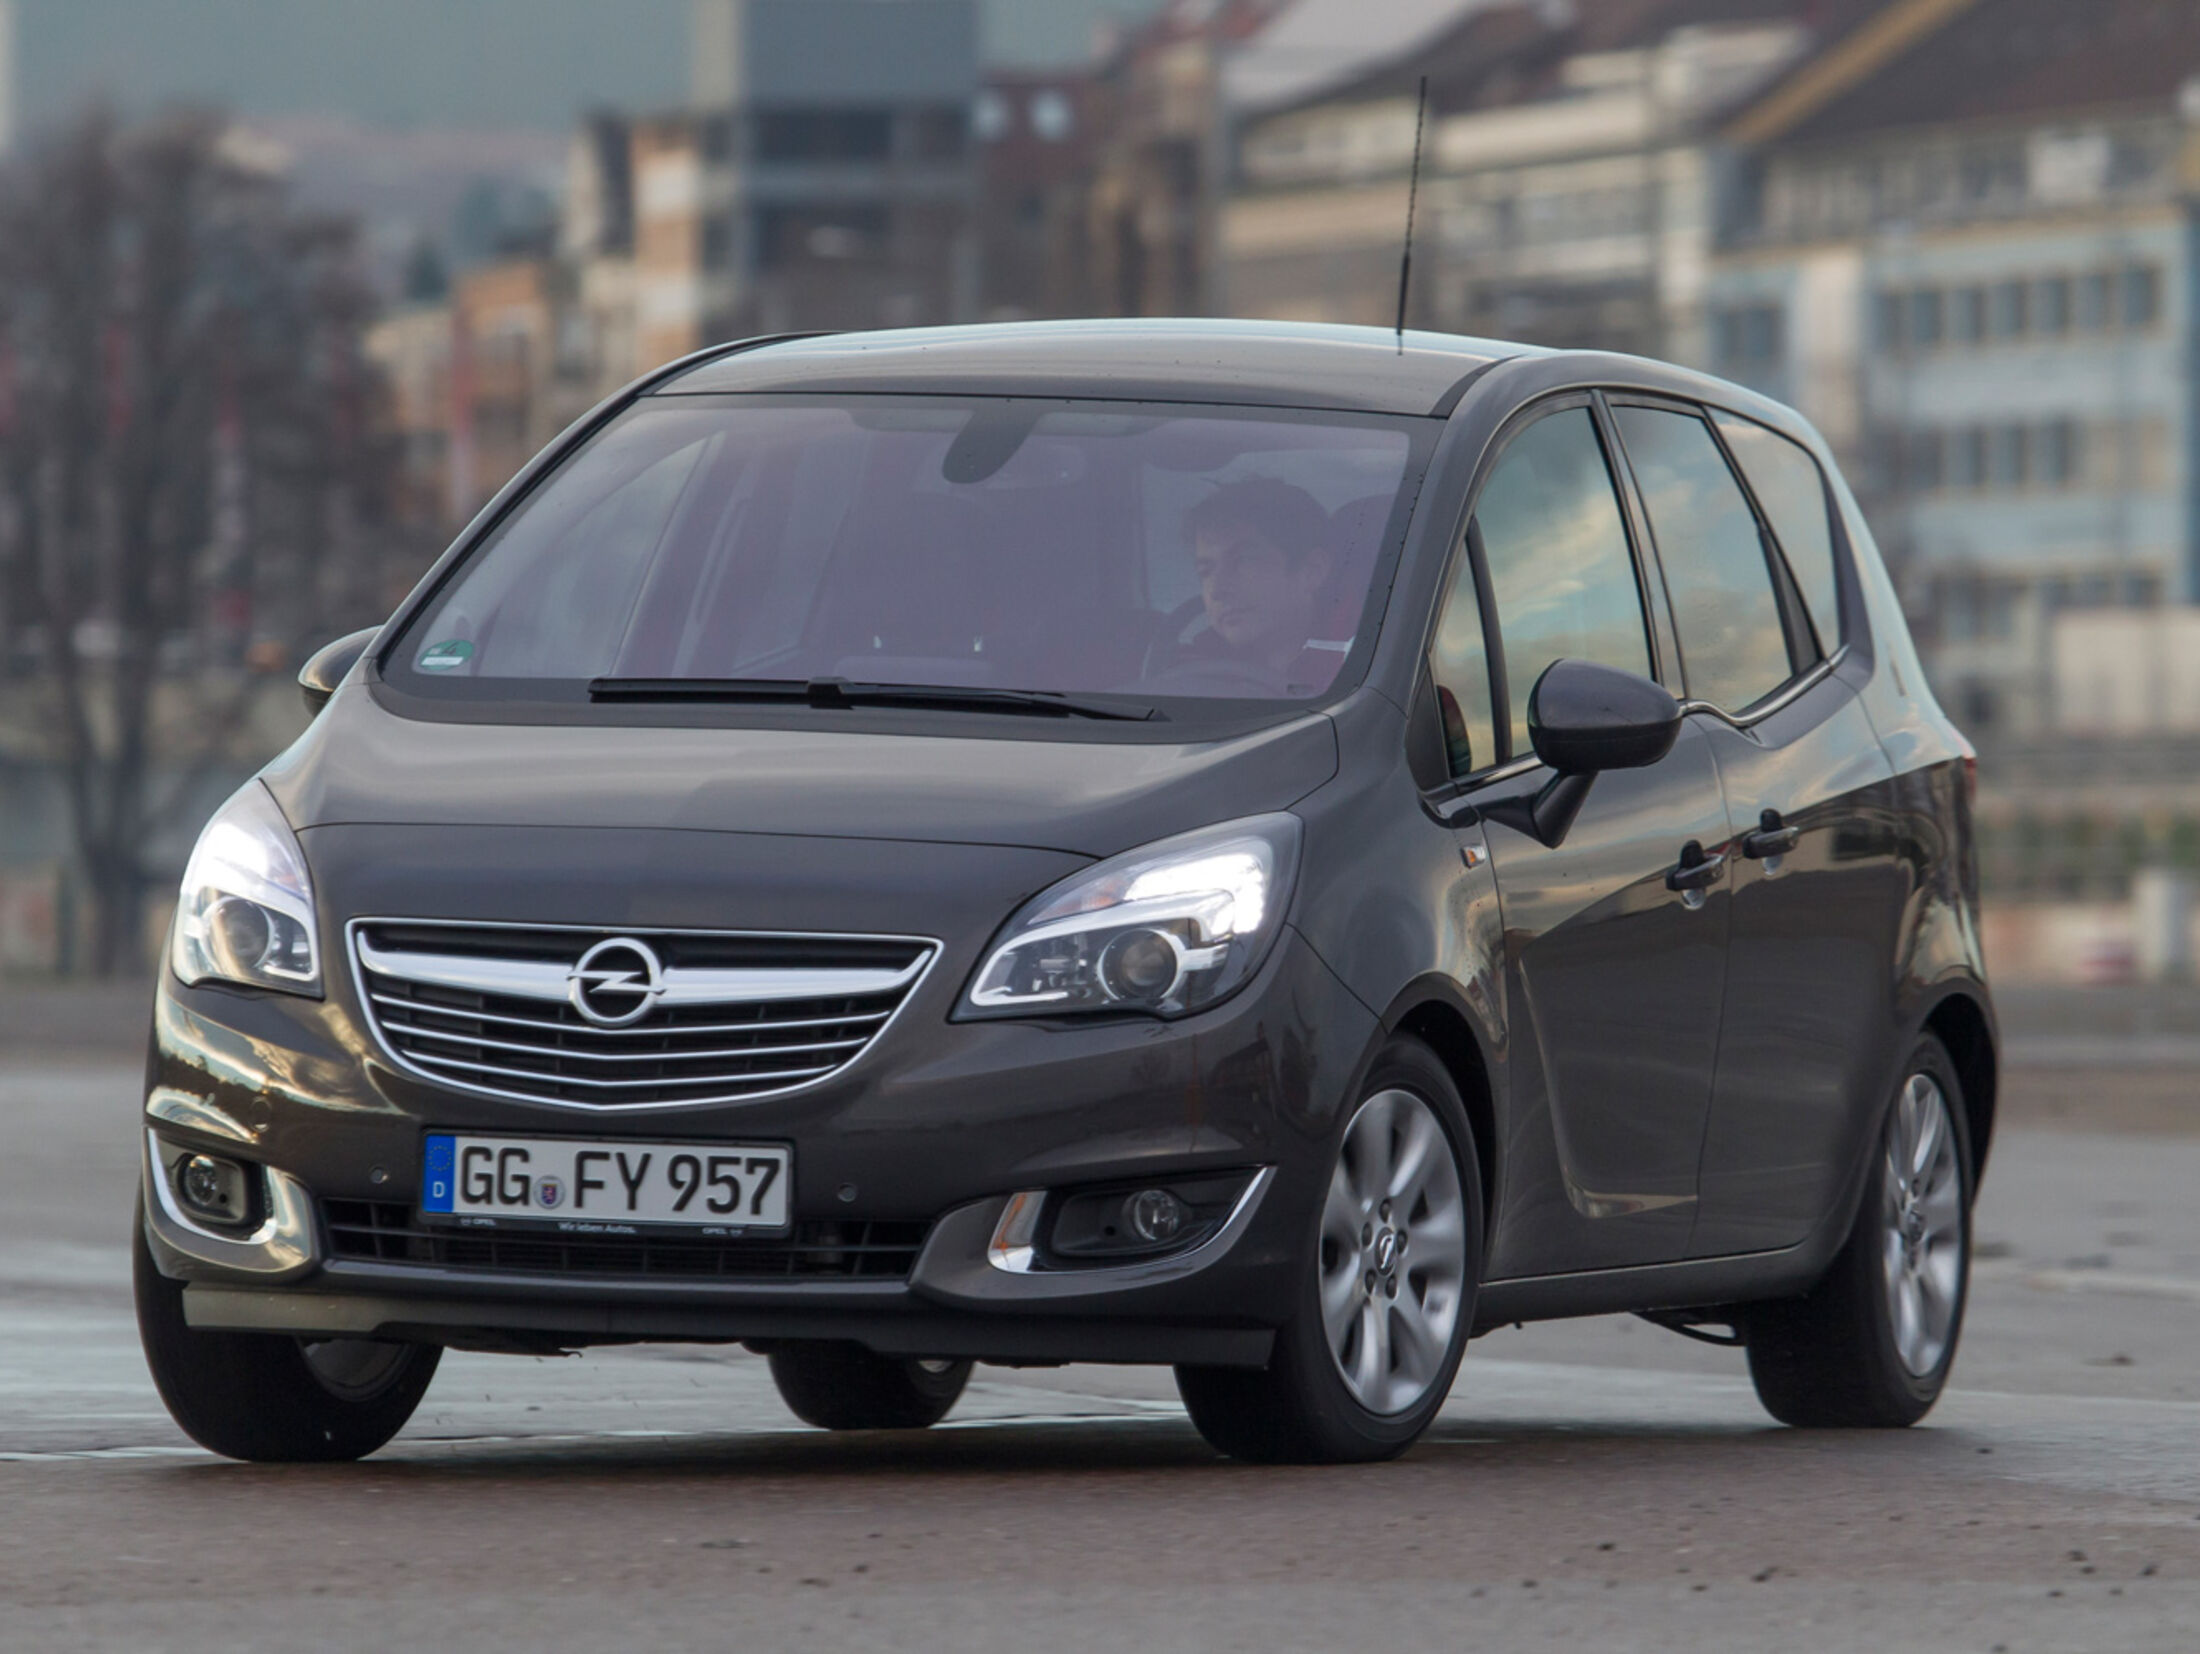 https://imgr1.auto-motor-und-sport.de/Opel-Meriva-1-4-ecoFlex-Frontansicht-jsonLd4x3-e316c6cc-759341.jpg